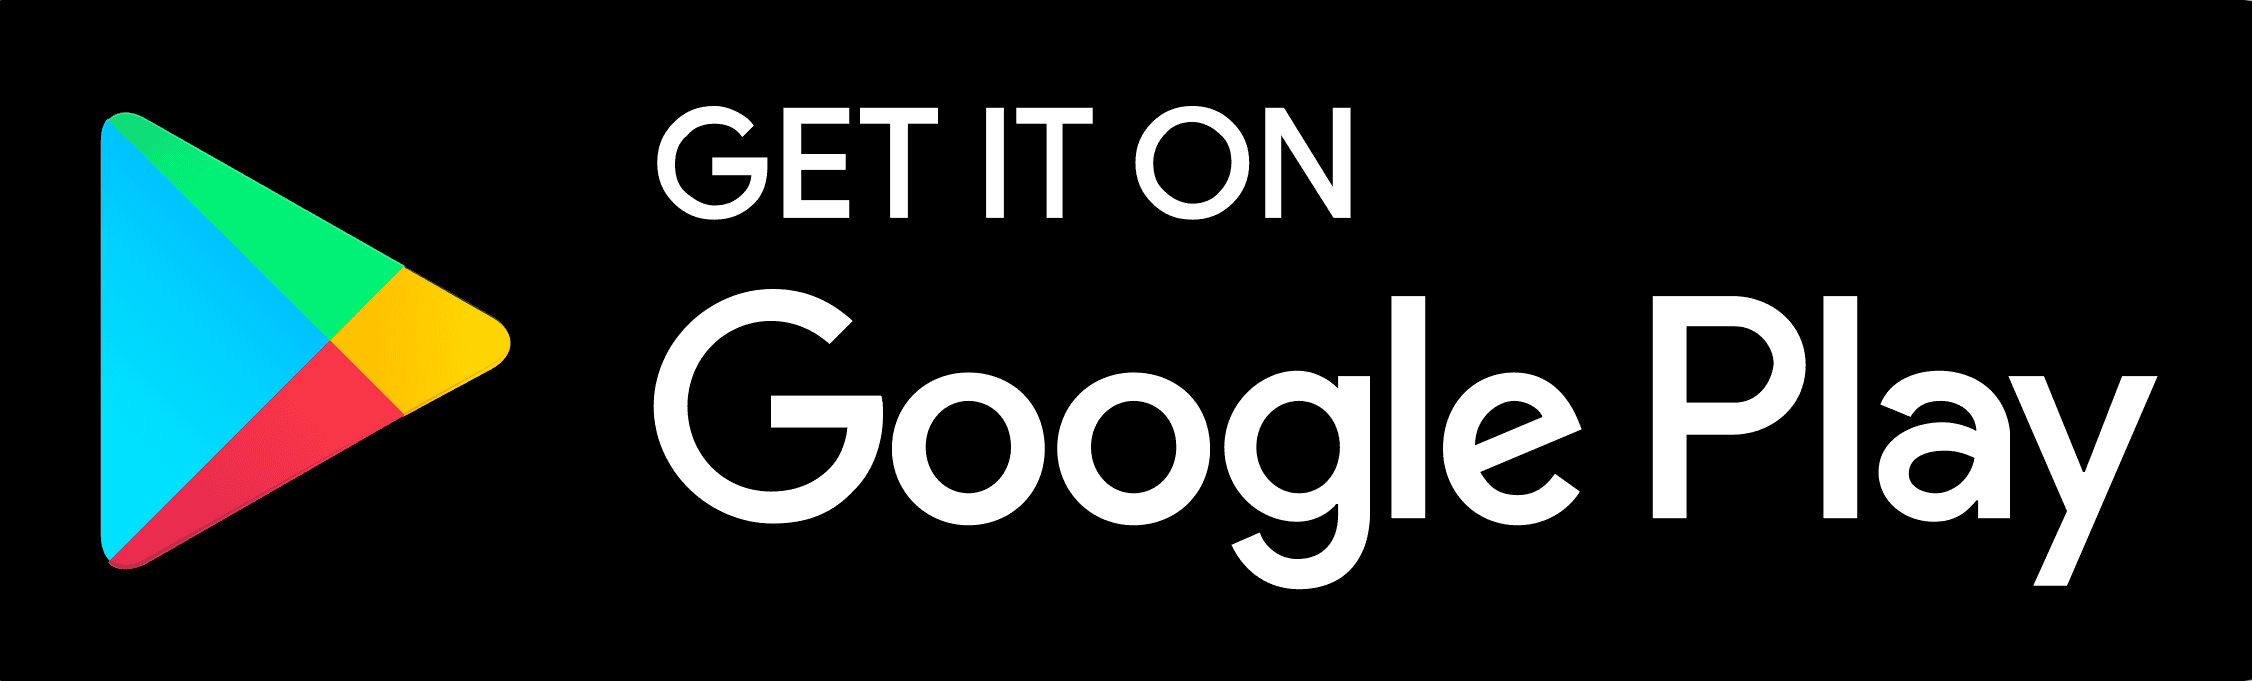 google play app logo